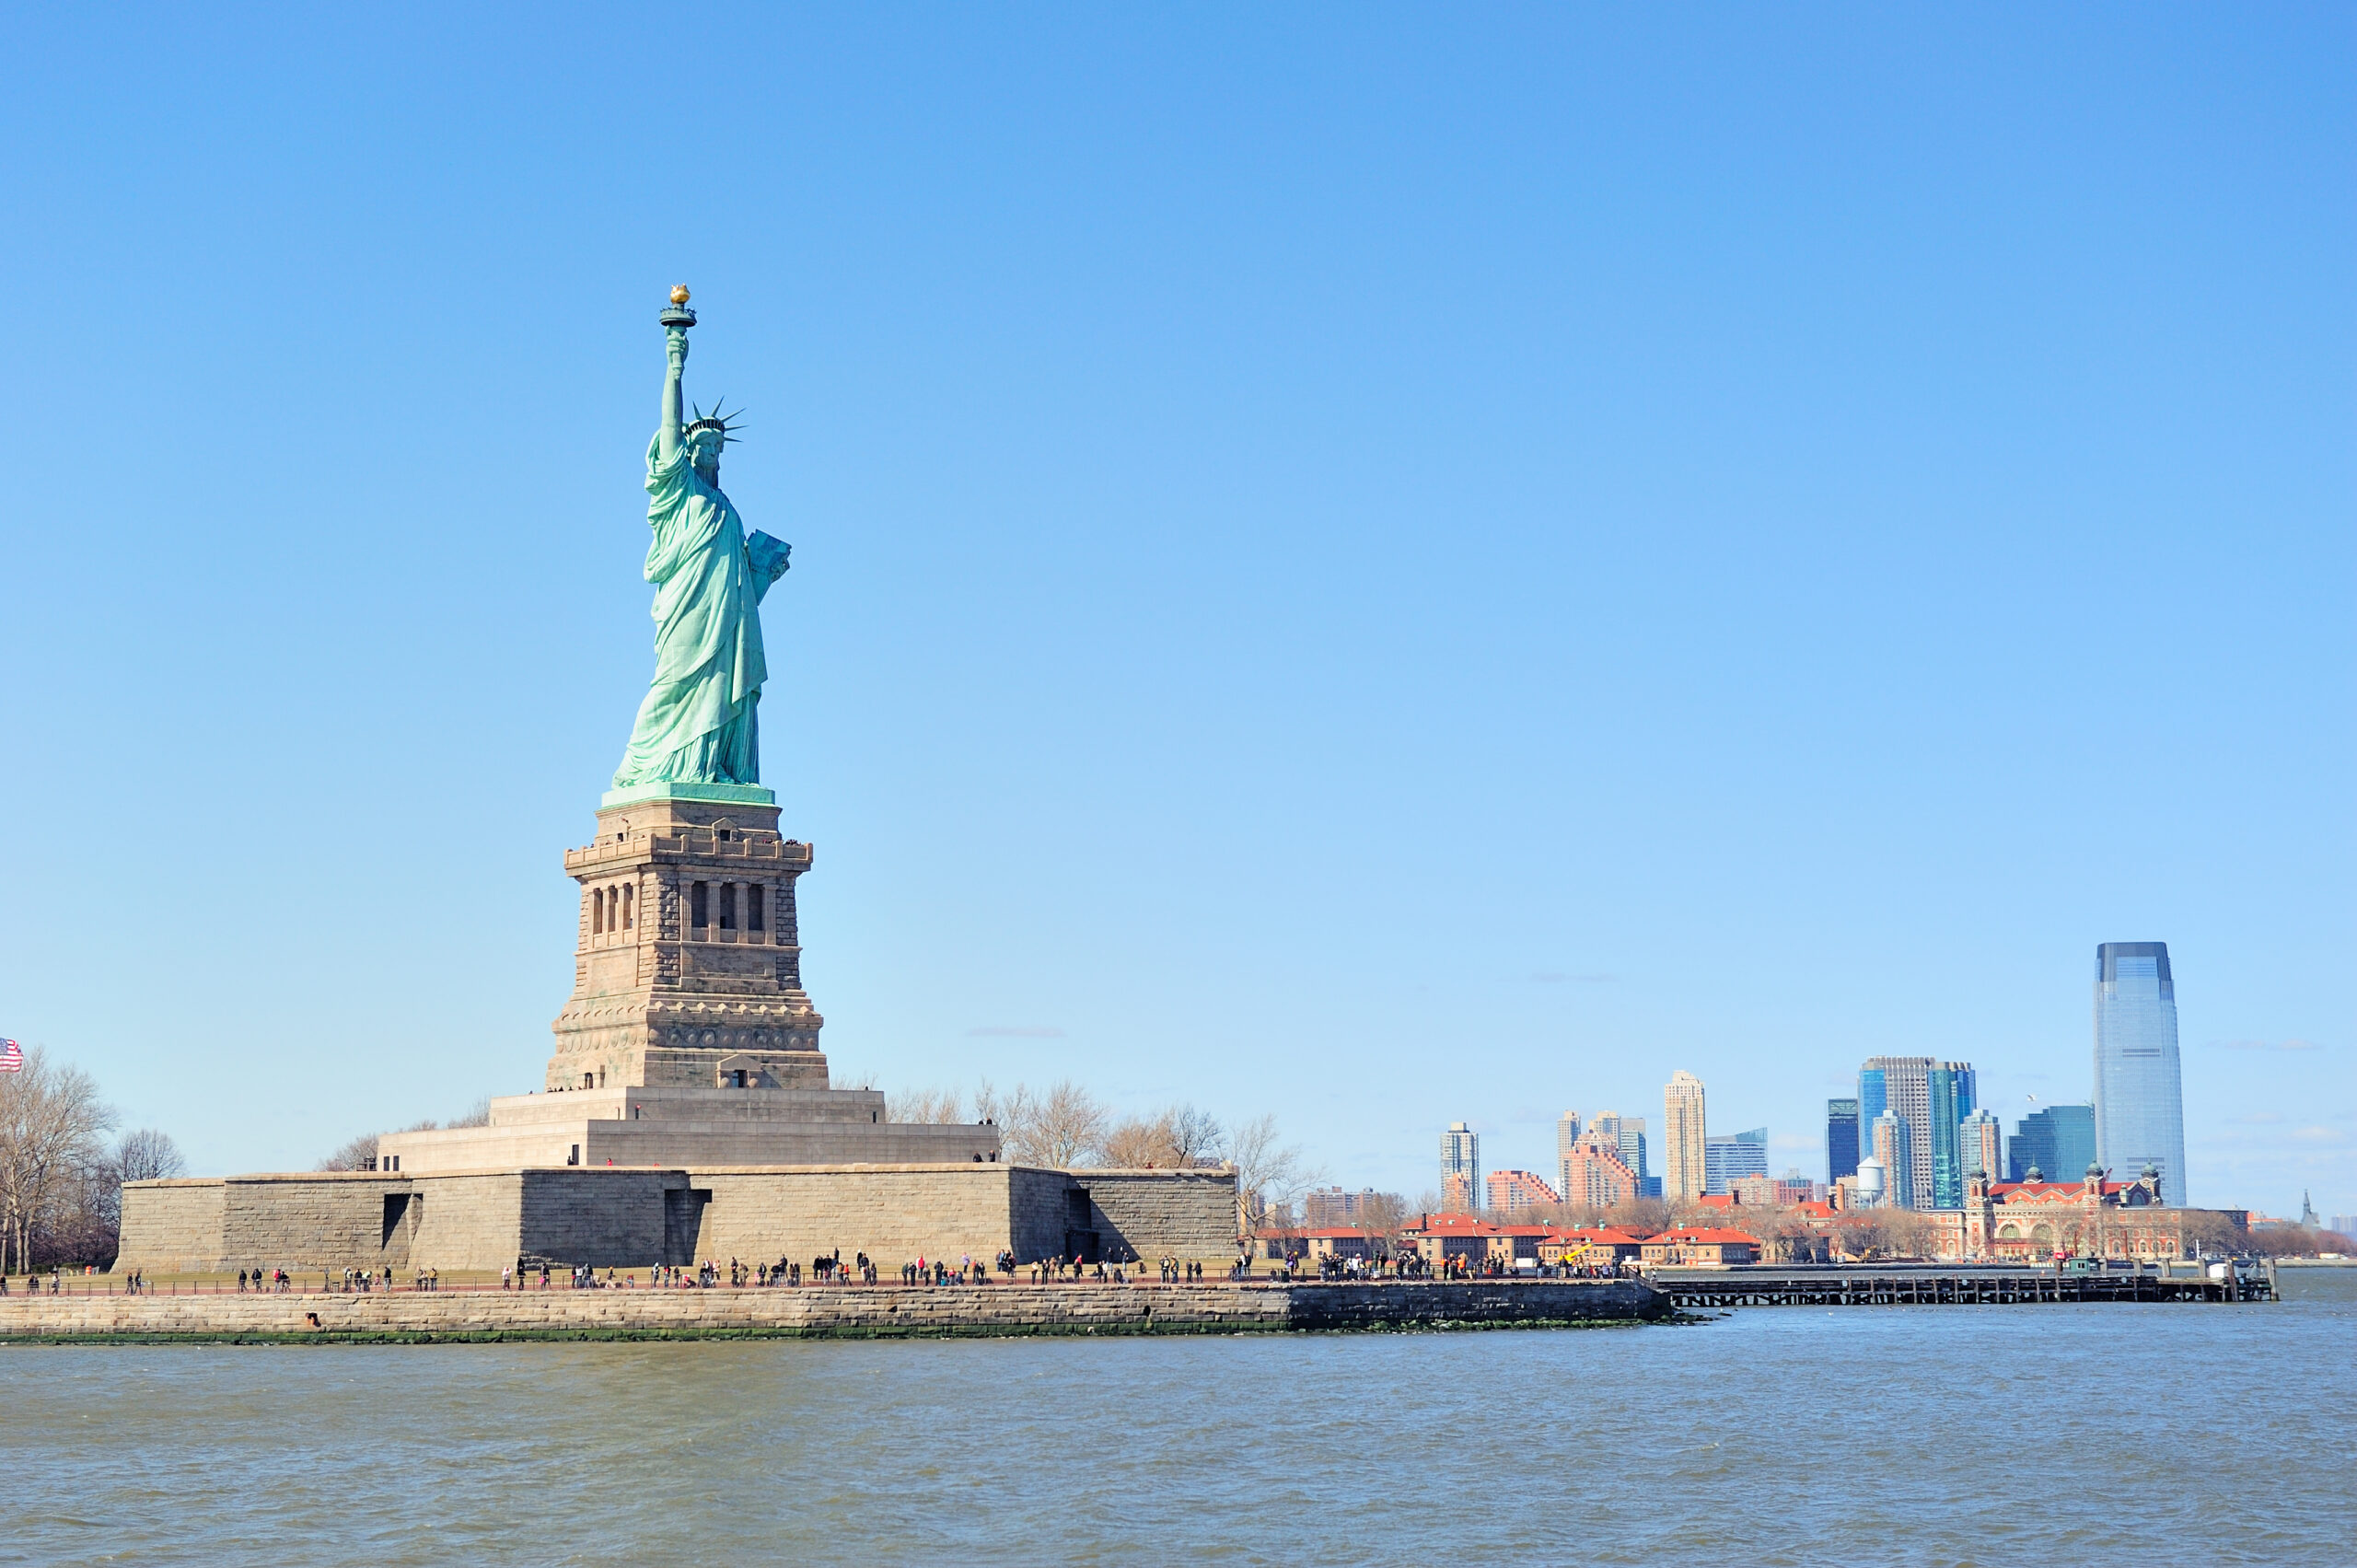 Statue of Liberty tours
